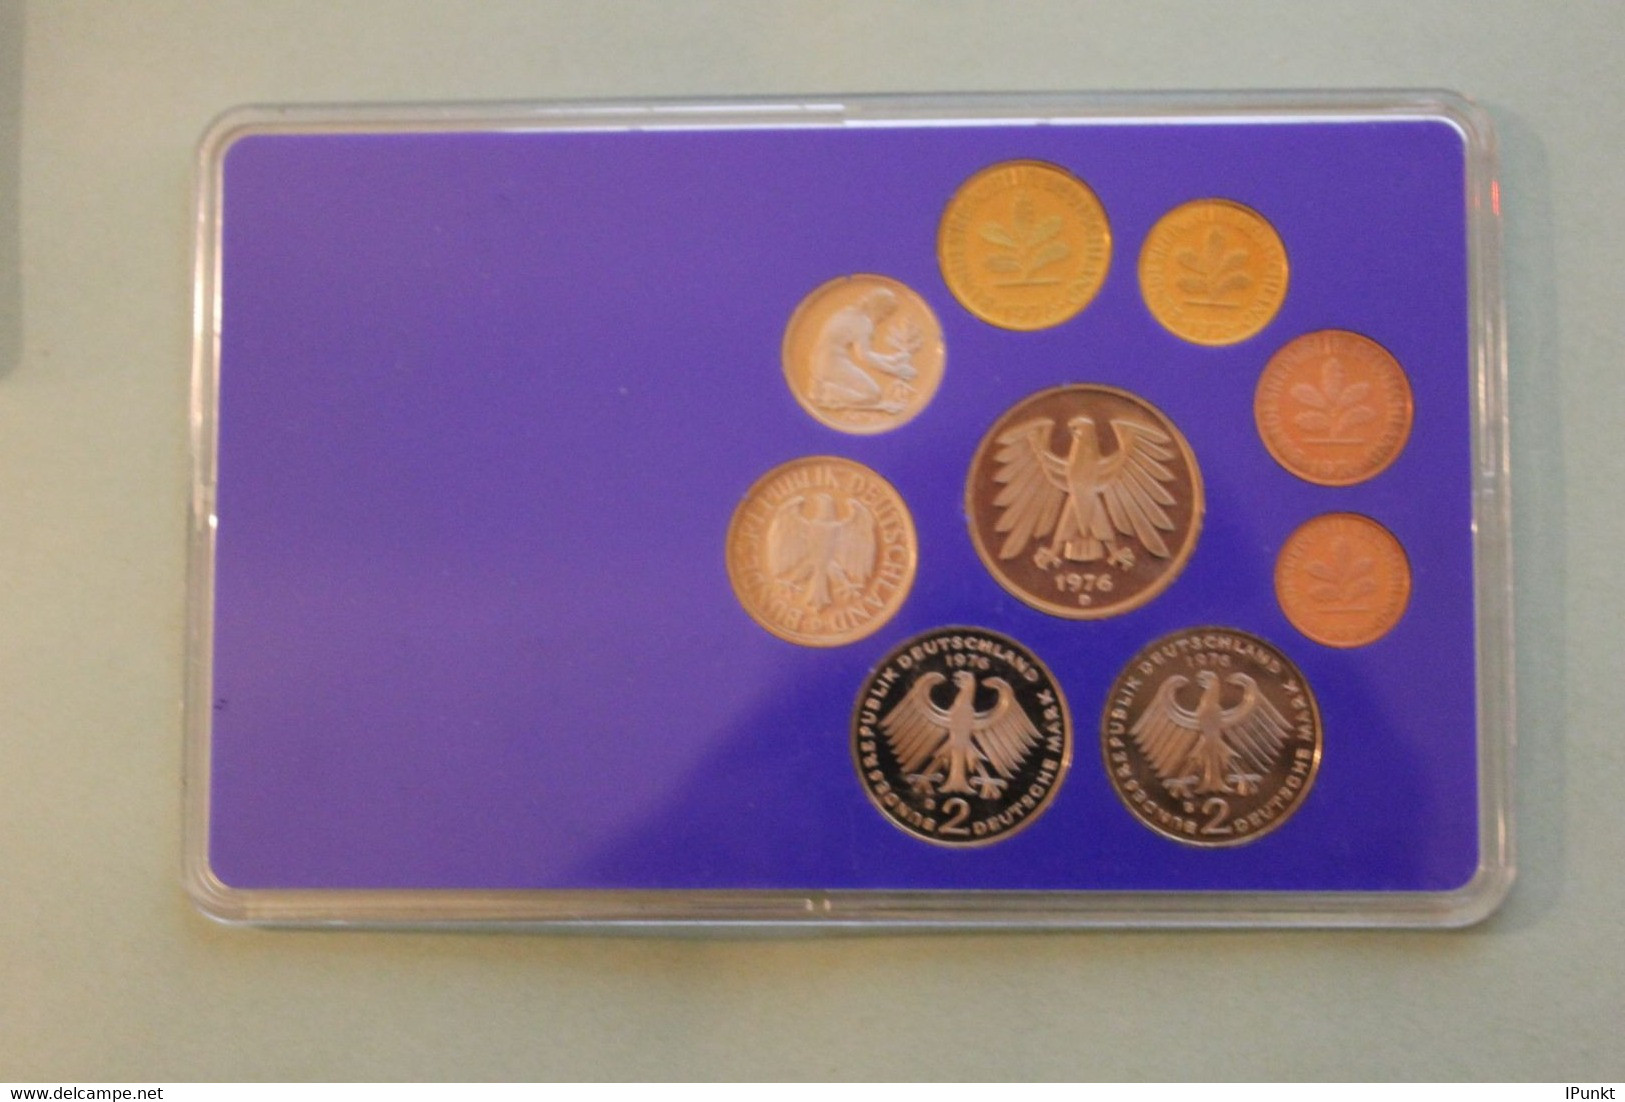 Deutschland, Kursmünzensatz Spiegelglanz (PP), 1976, D - Mint Sets & Proof Sets